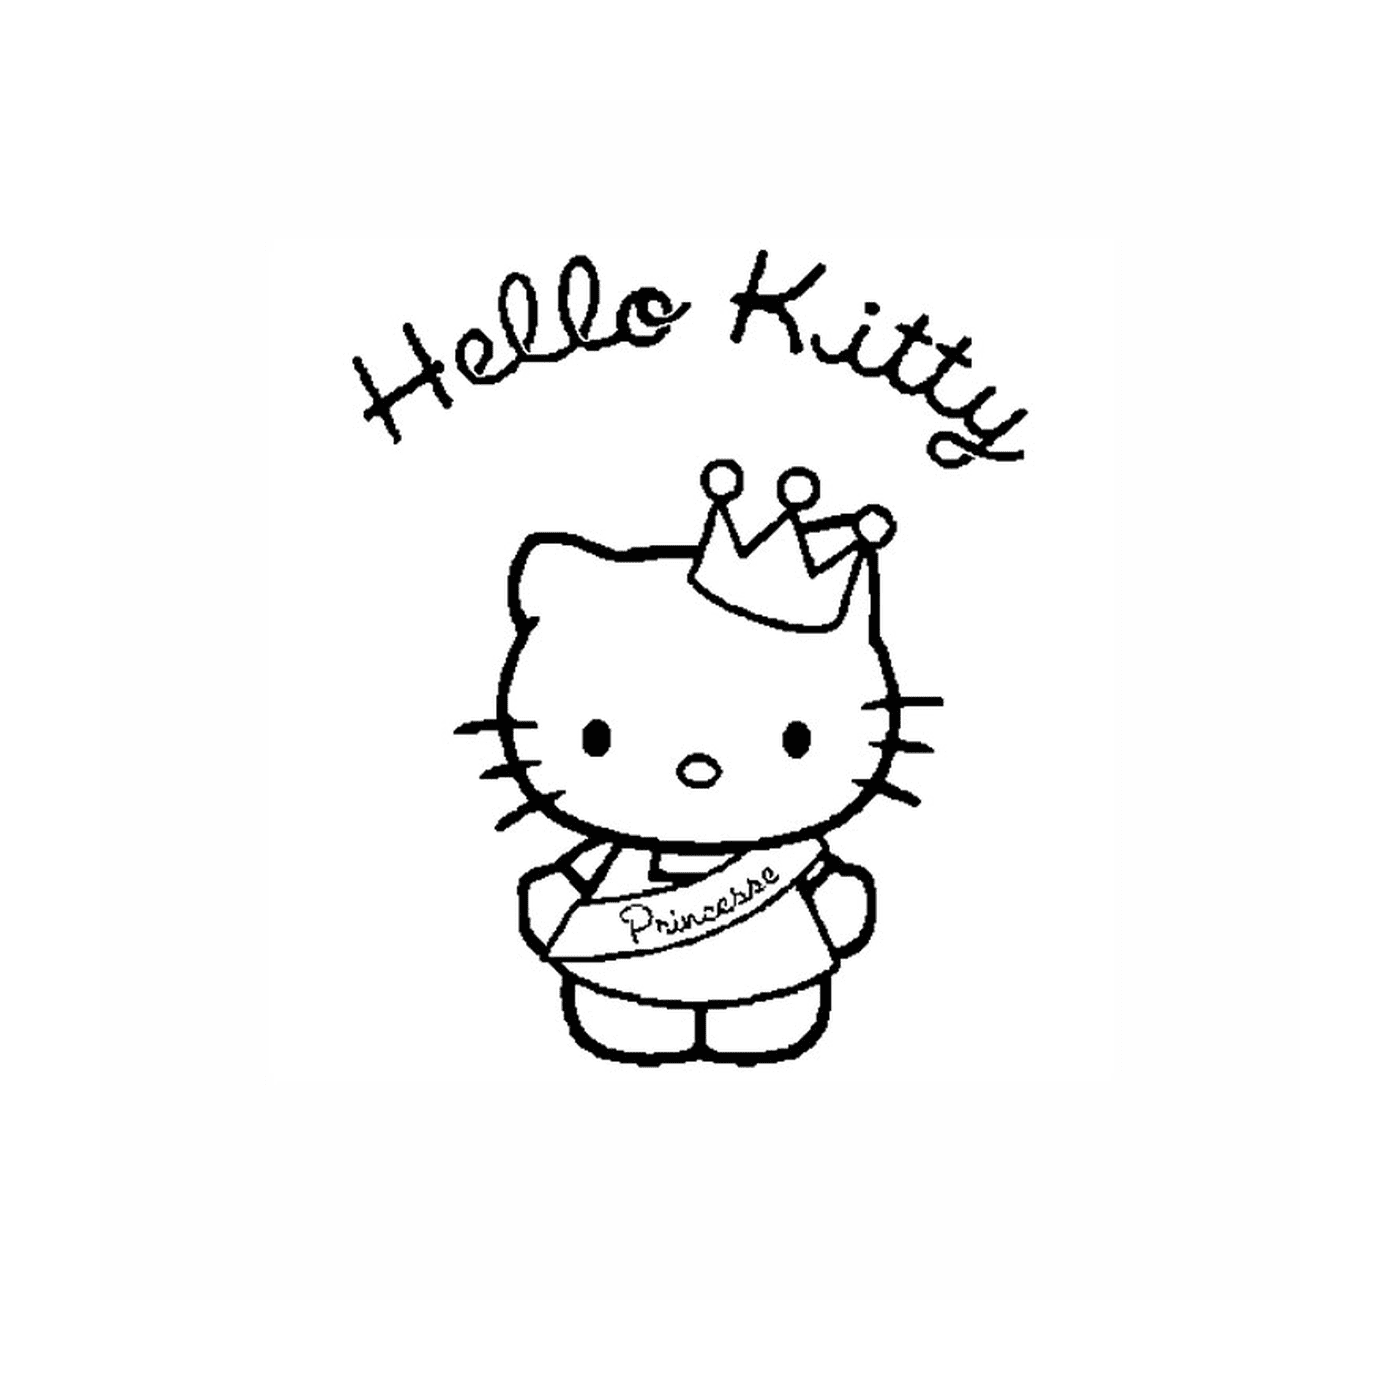   Hello Kitty avec une couronne 